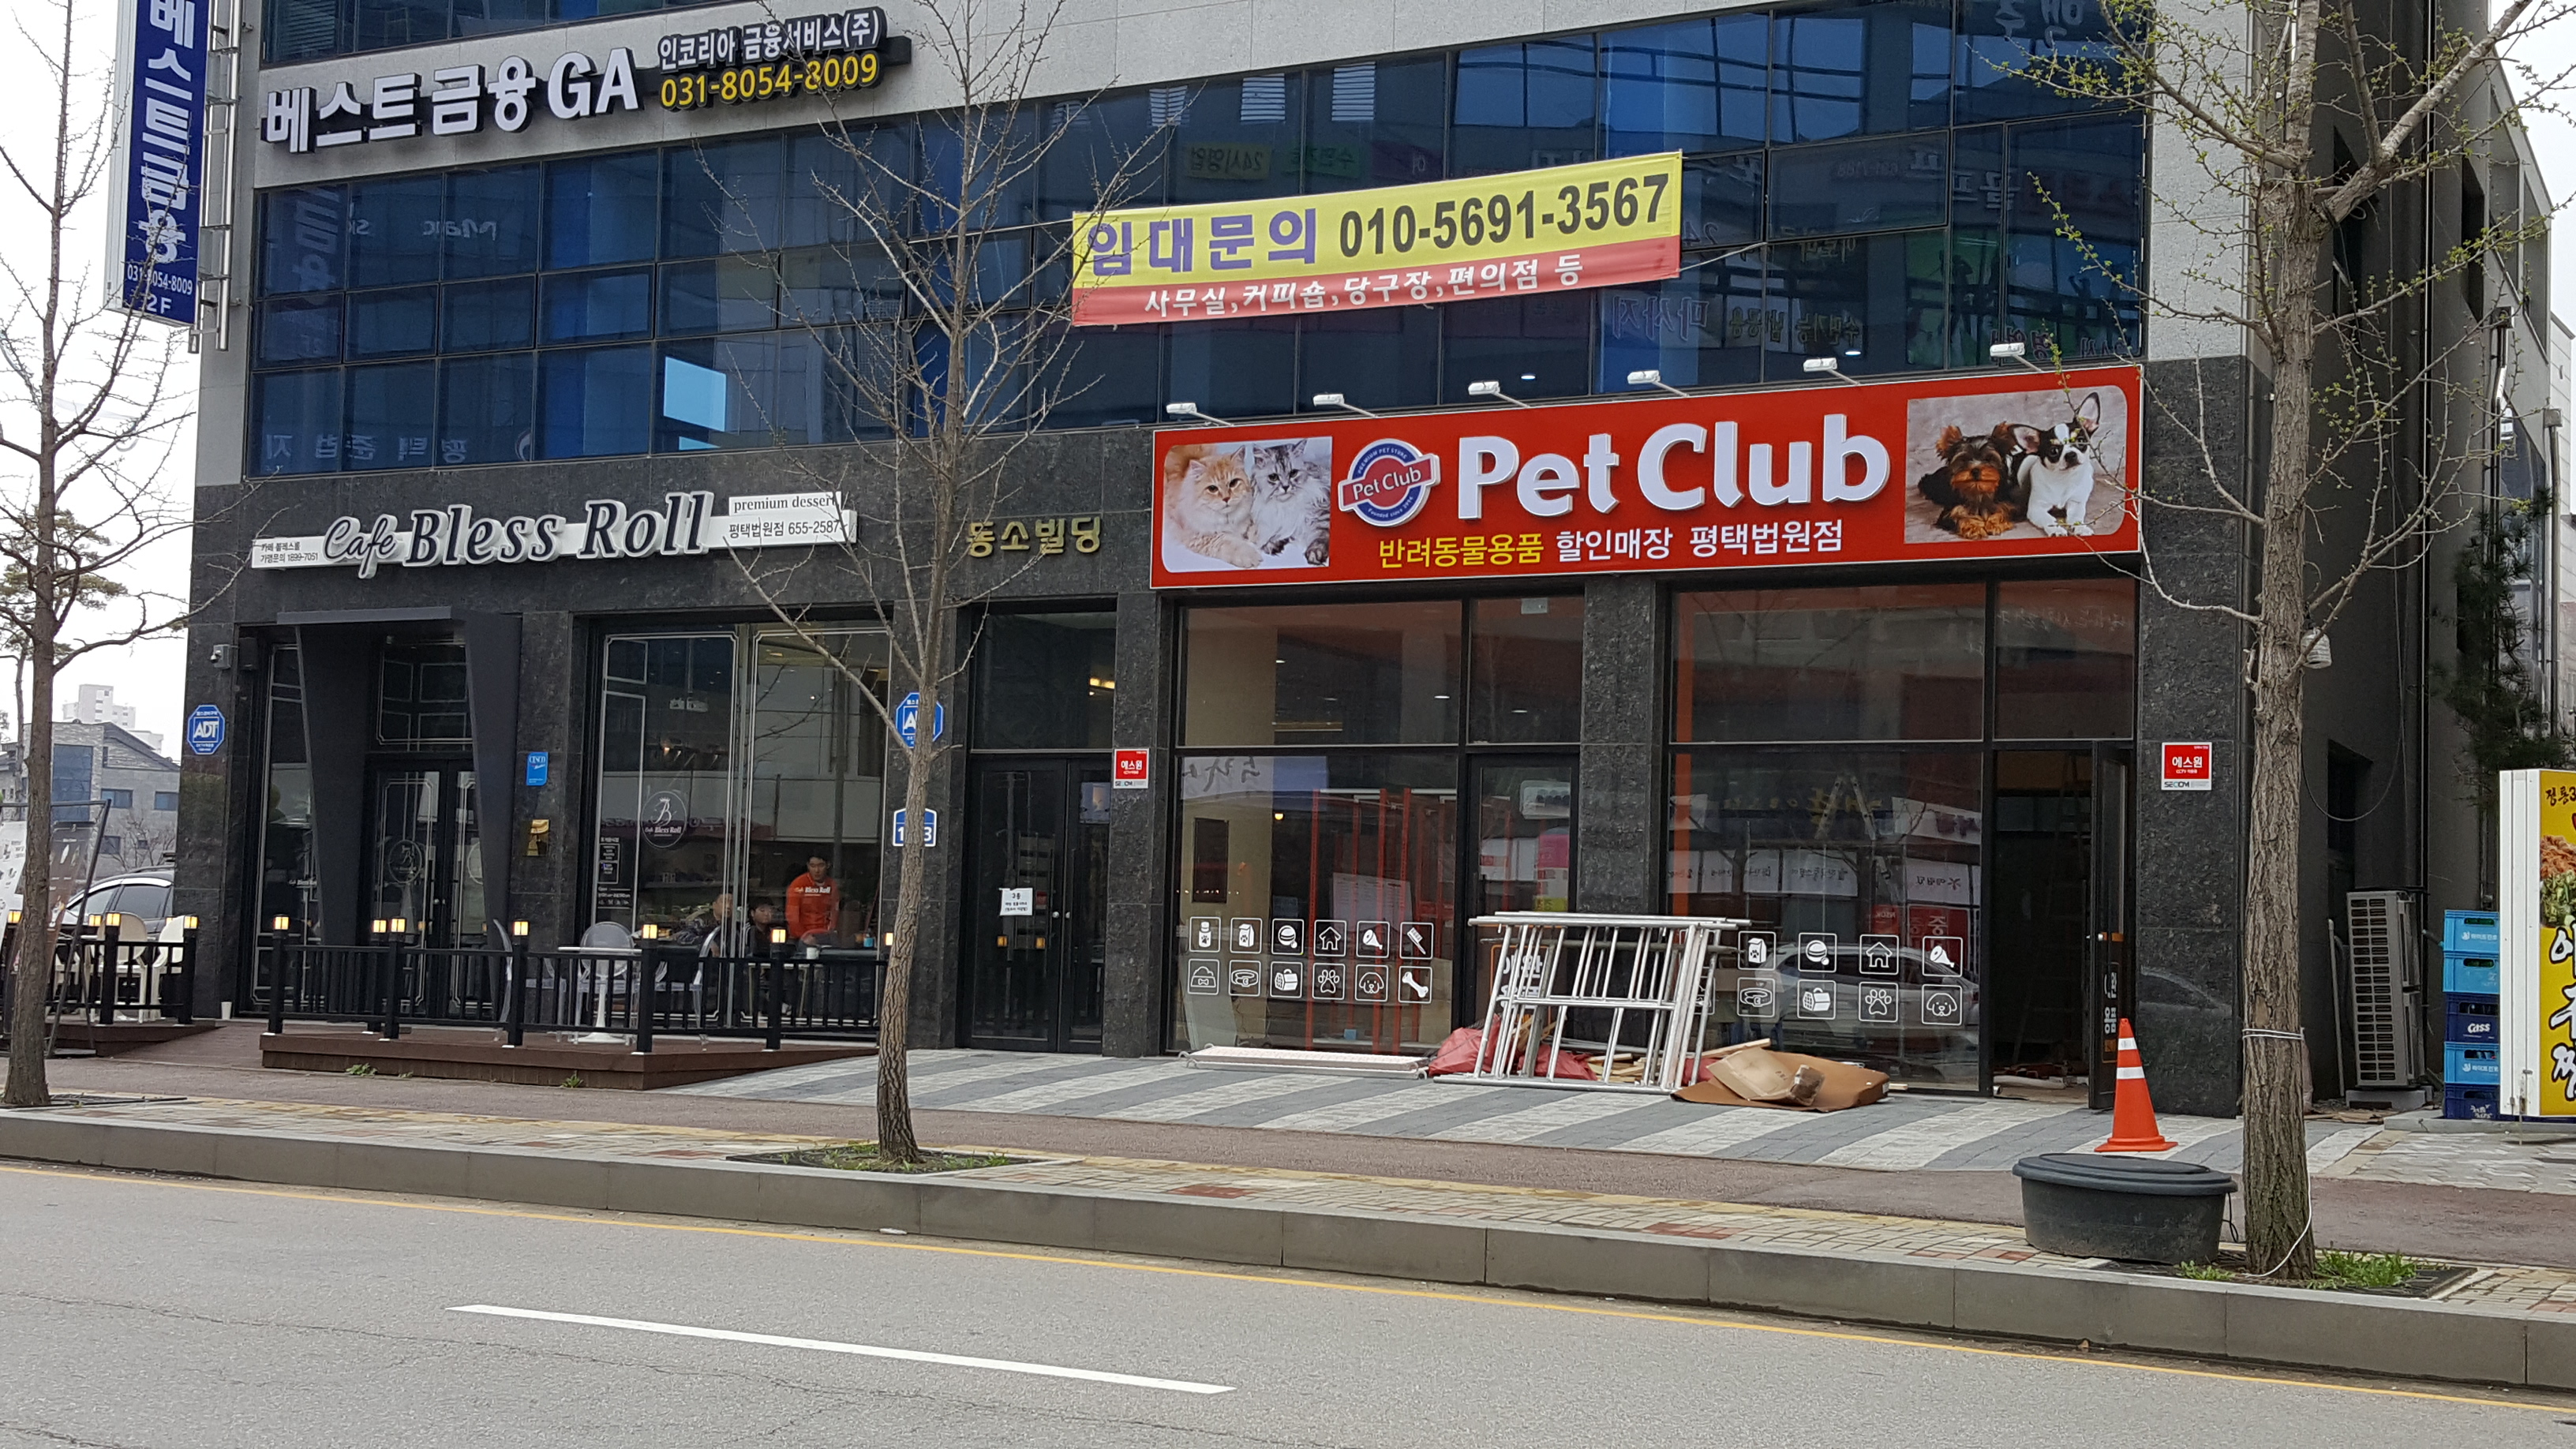 20180406_114926.jpg : 동삭동에 펫클럽이라는 애완동물 할인매장이 생기는군요